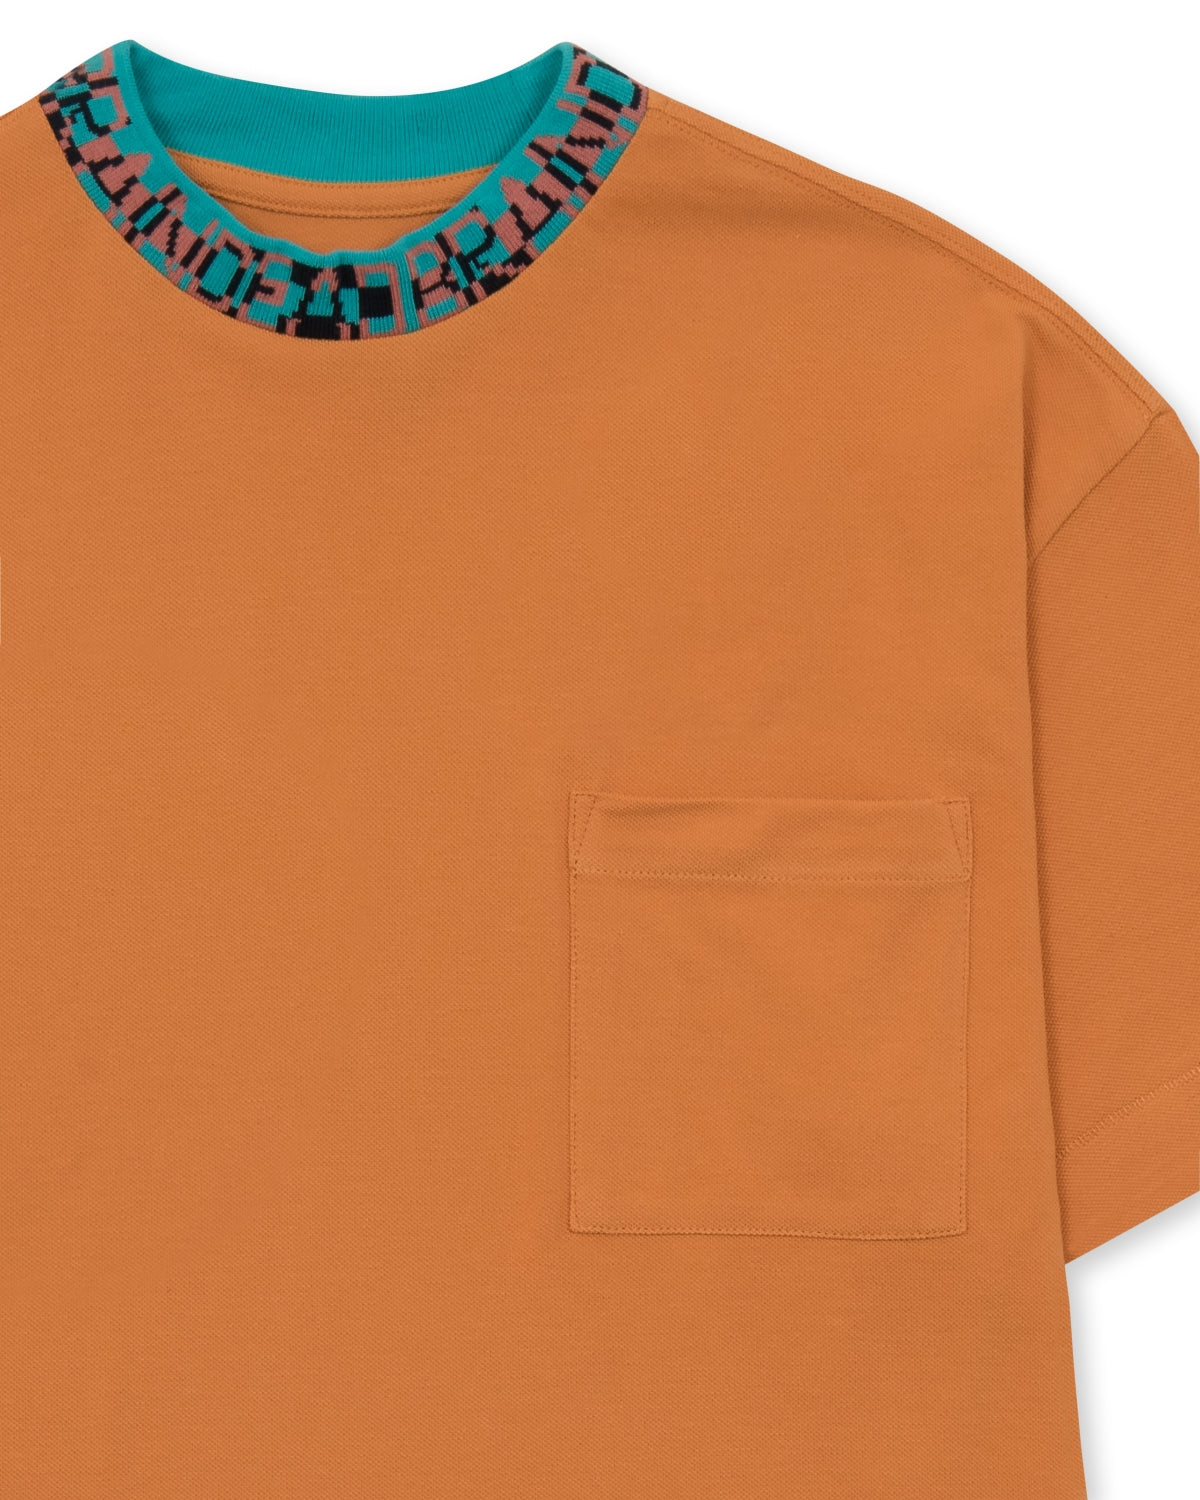 Jacquarded Collar Pique Mock Neck Shirt - Orange 3